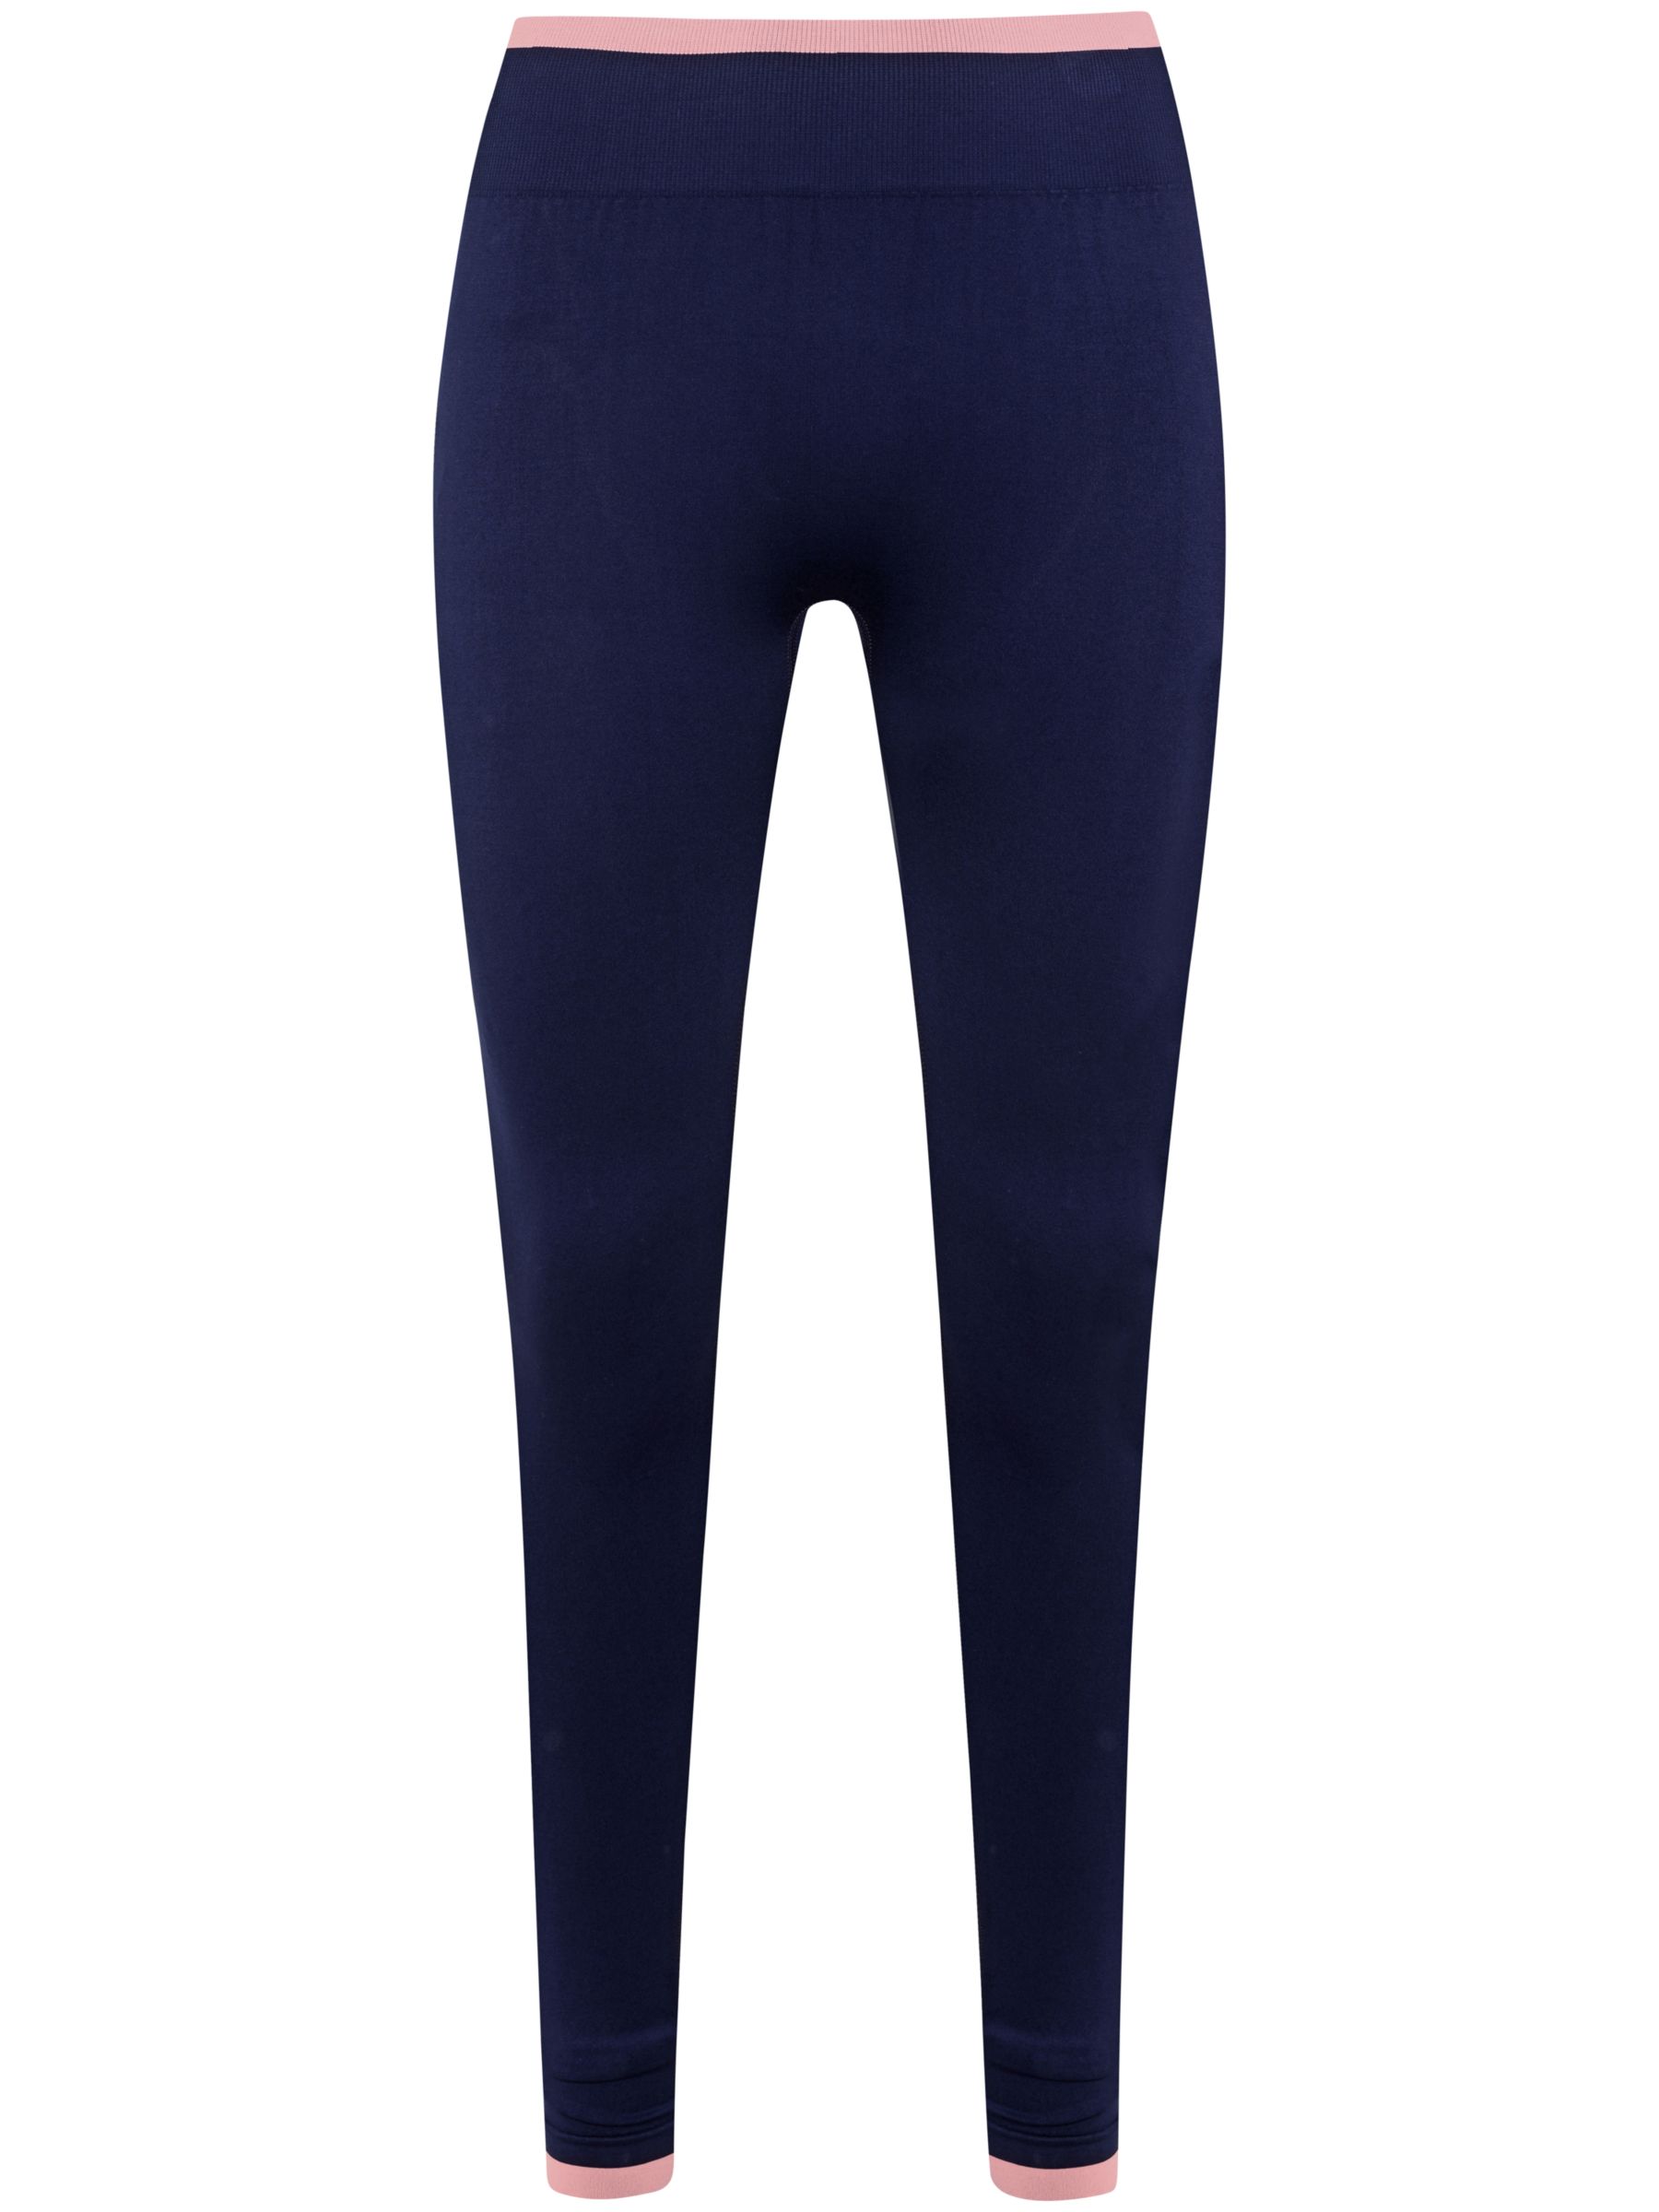 NWT Women's Active Life Navy Blue Lattice Yoga Pants Size S, M, L